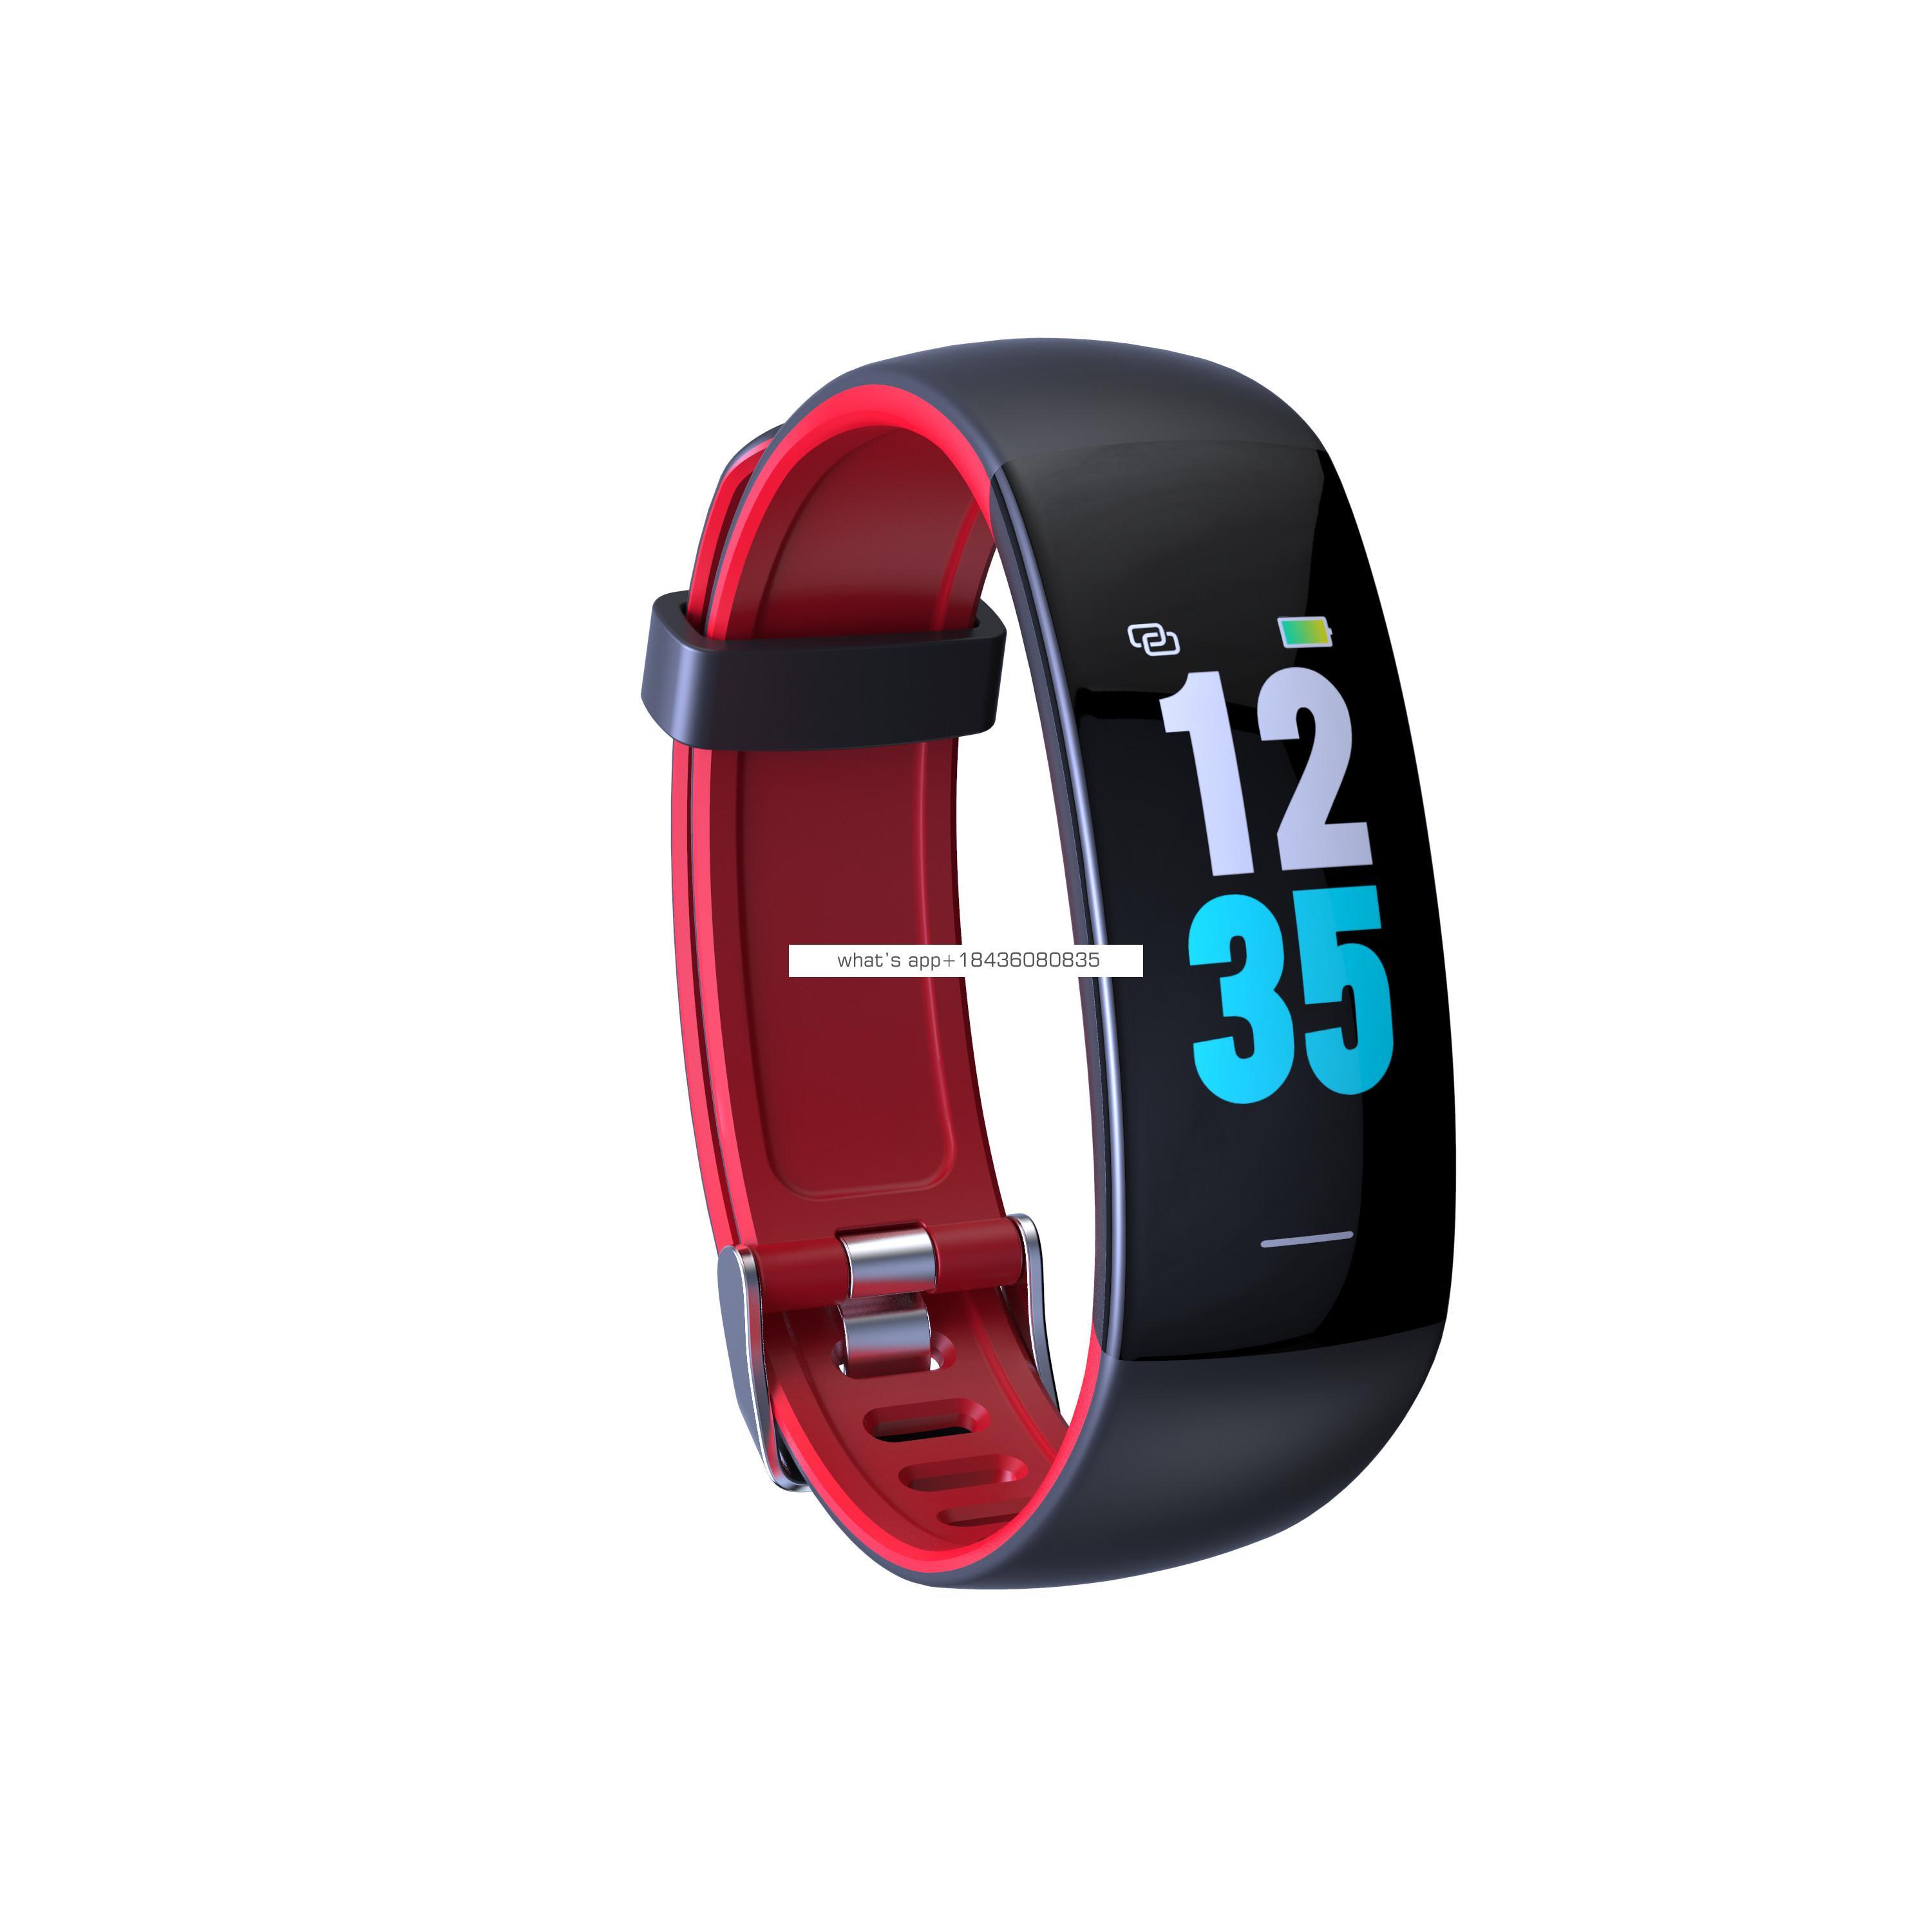 Guangzhou full android led digital sport smart bluetooth watch band bracelet smart watch heart rate camera